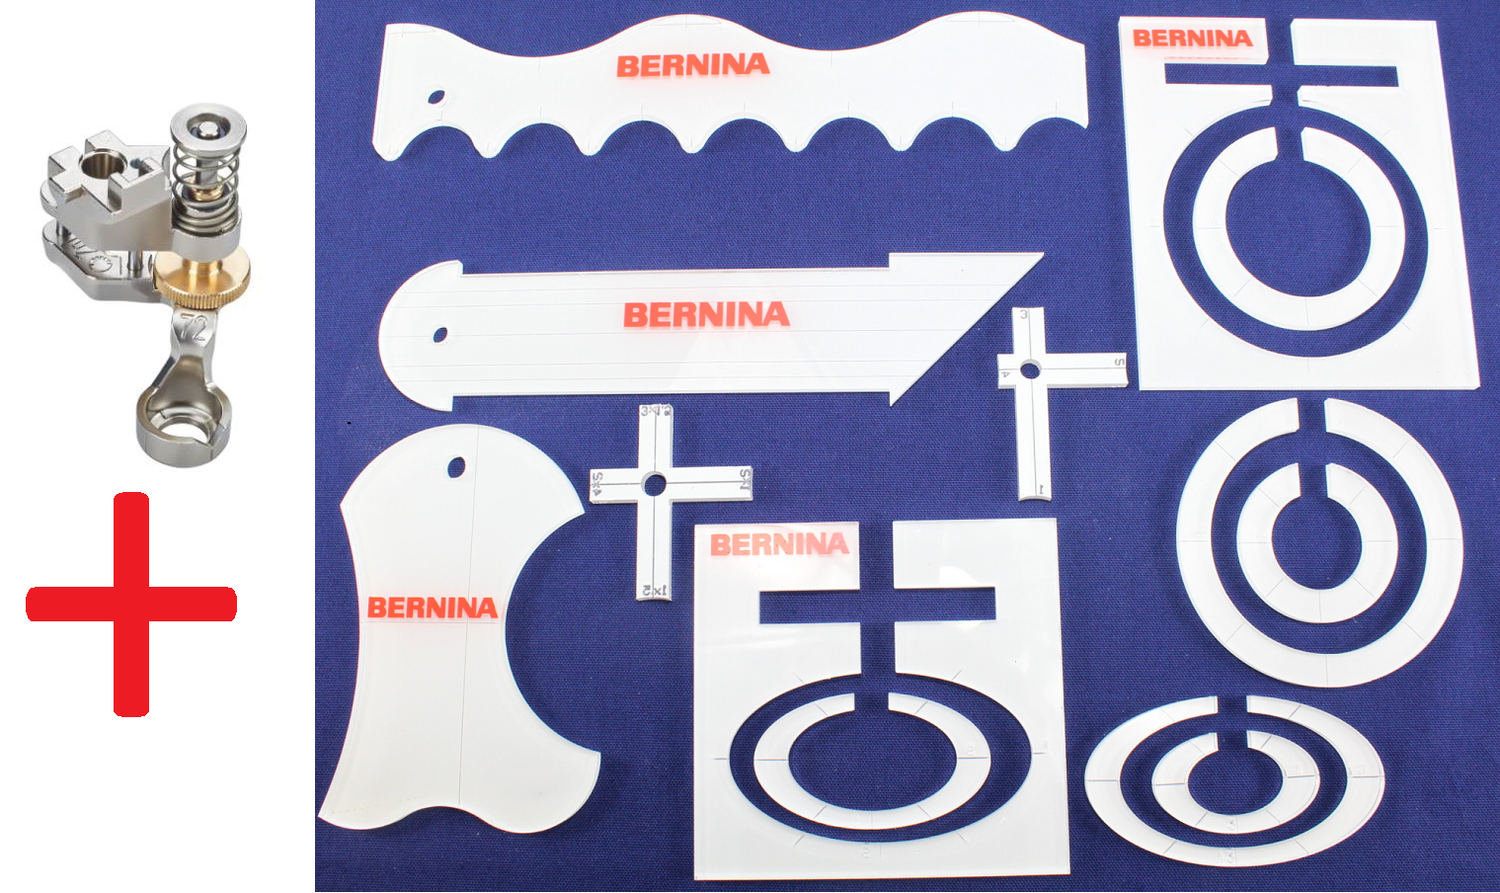 Bernina Rulerfuß Nr. 72 mit Formschablonen-Set